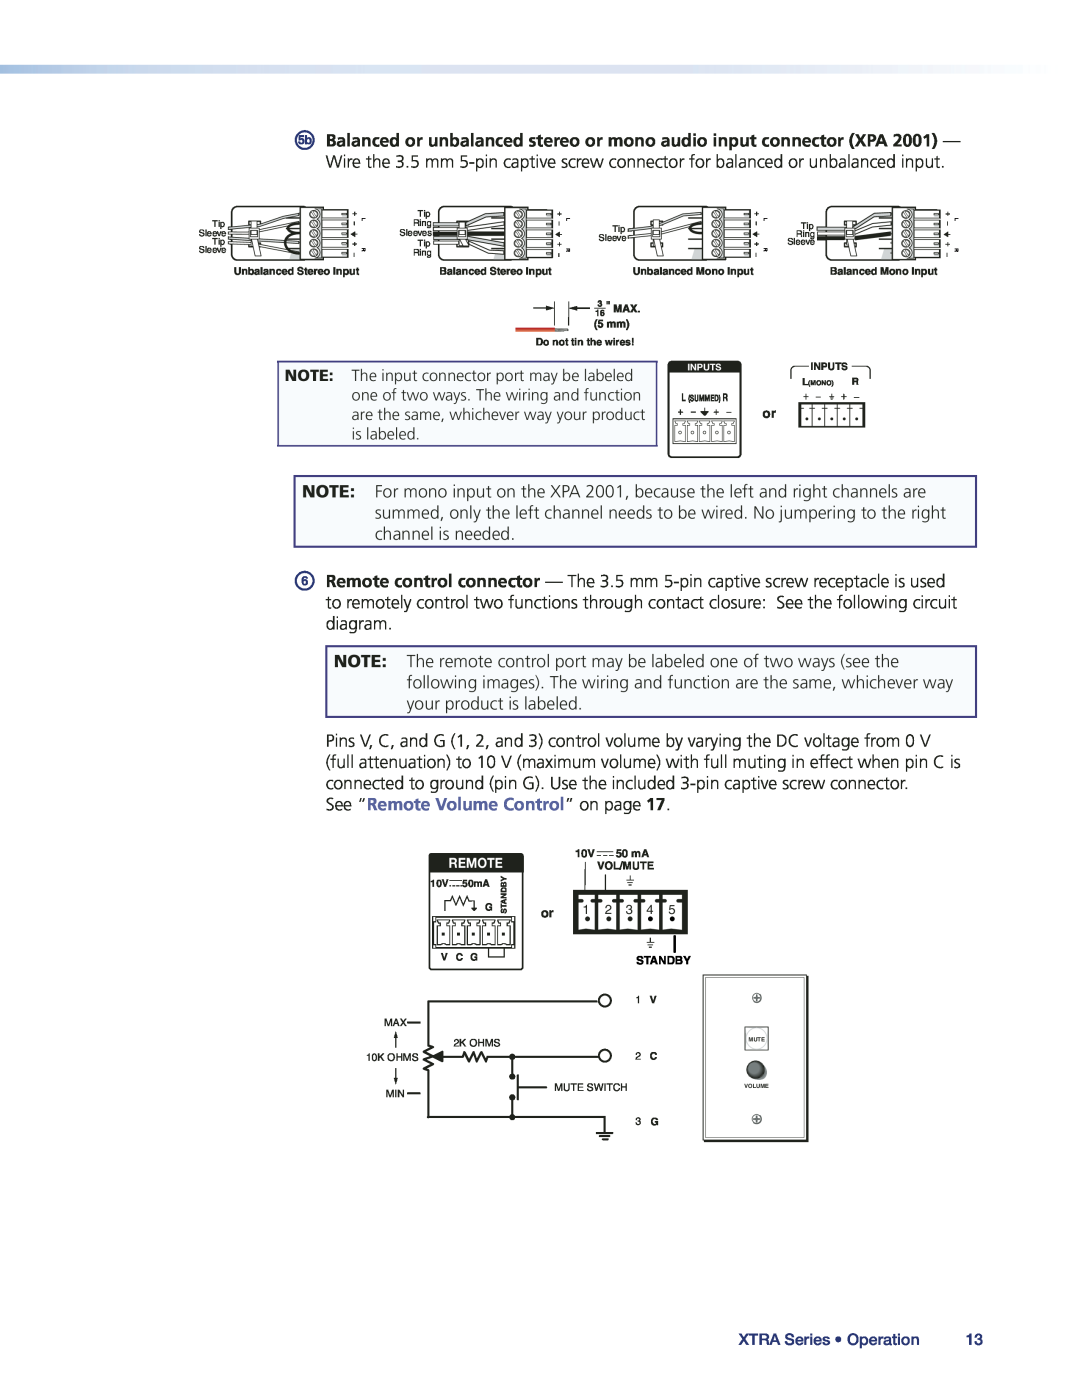 Extron electronic XPA1002, XPA2001-70V, XPA2001-100V manual See “Remote Volume Control” on page, XTRA Series Operation 